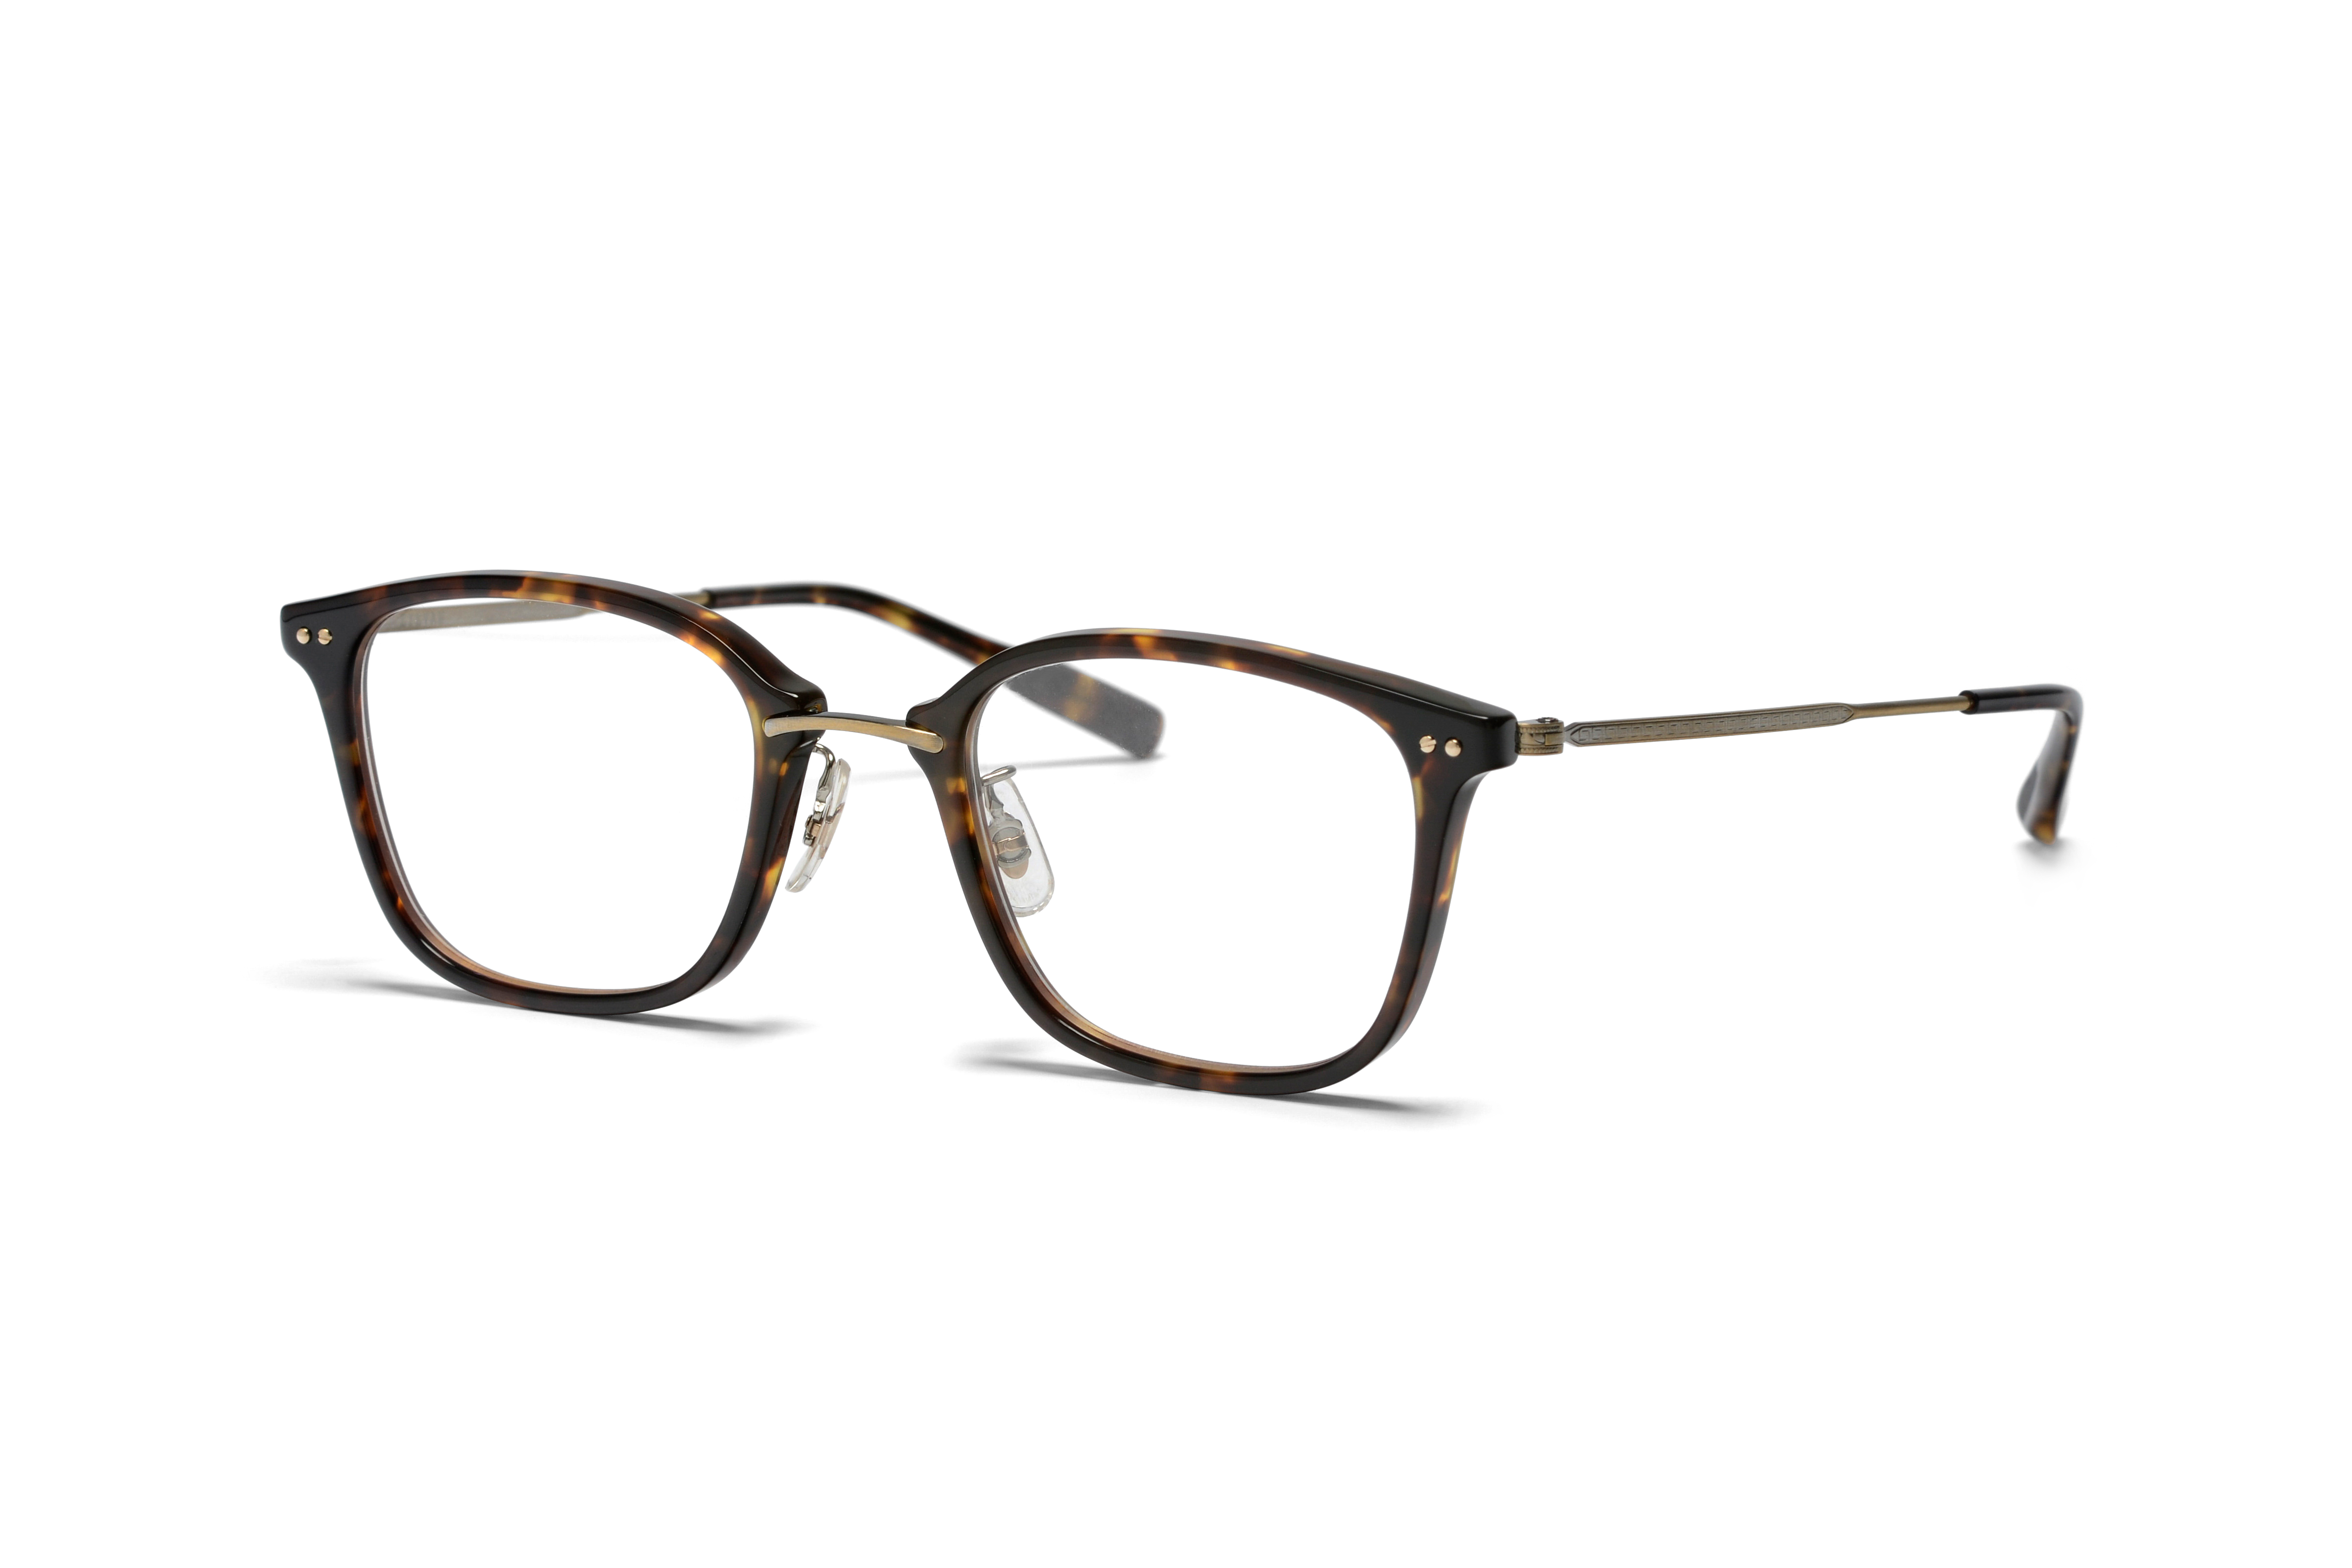 MacDougal by EYEVAN | Try on glasses online & find optician | FAVR